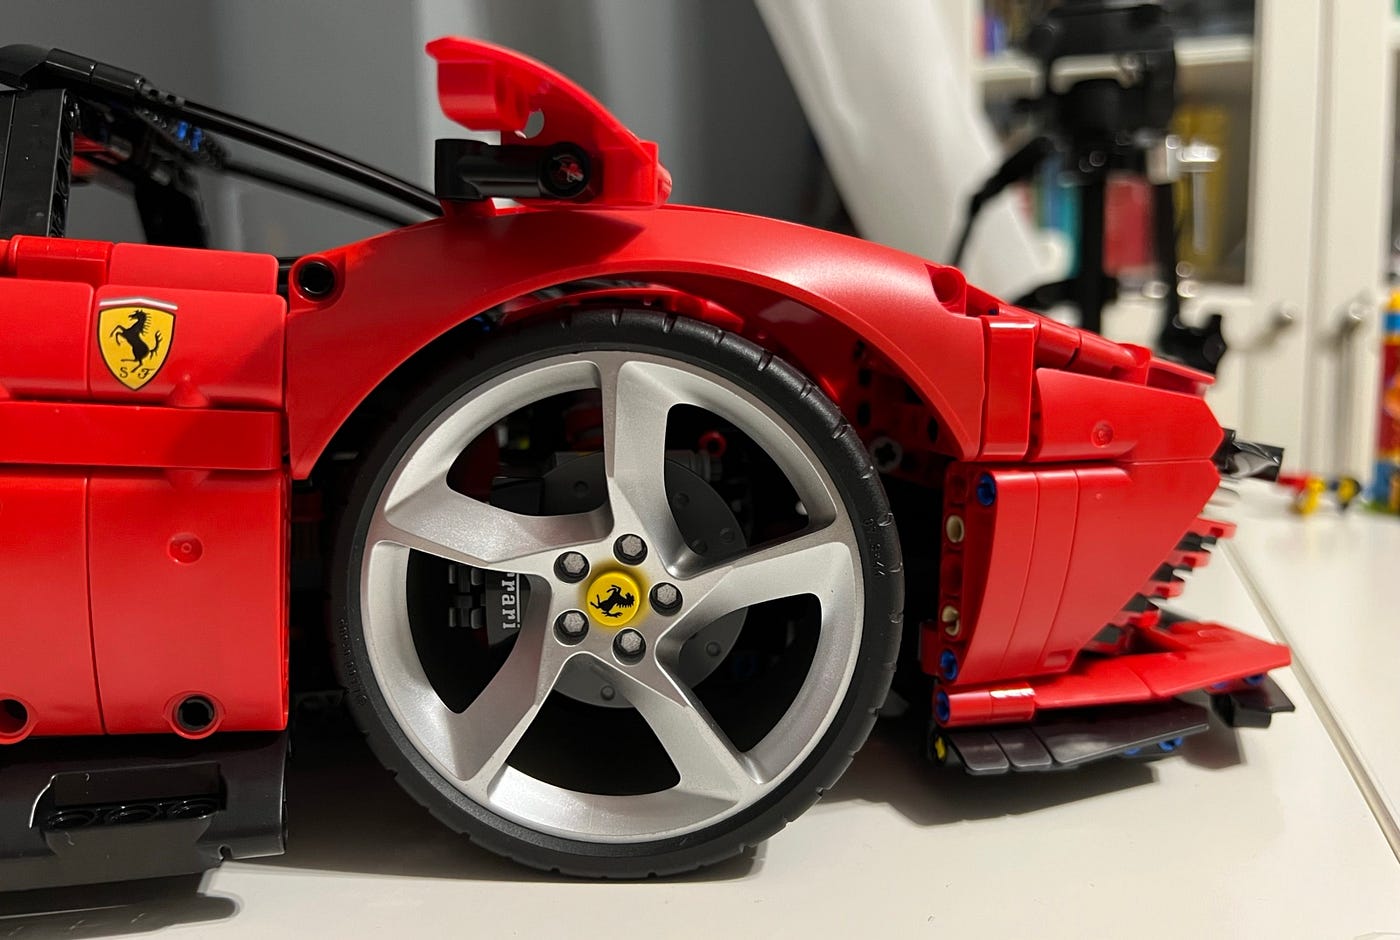 Lego's Ferrari Daytona SP3 Set Is as Insane as the Real Car